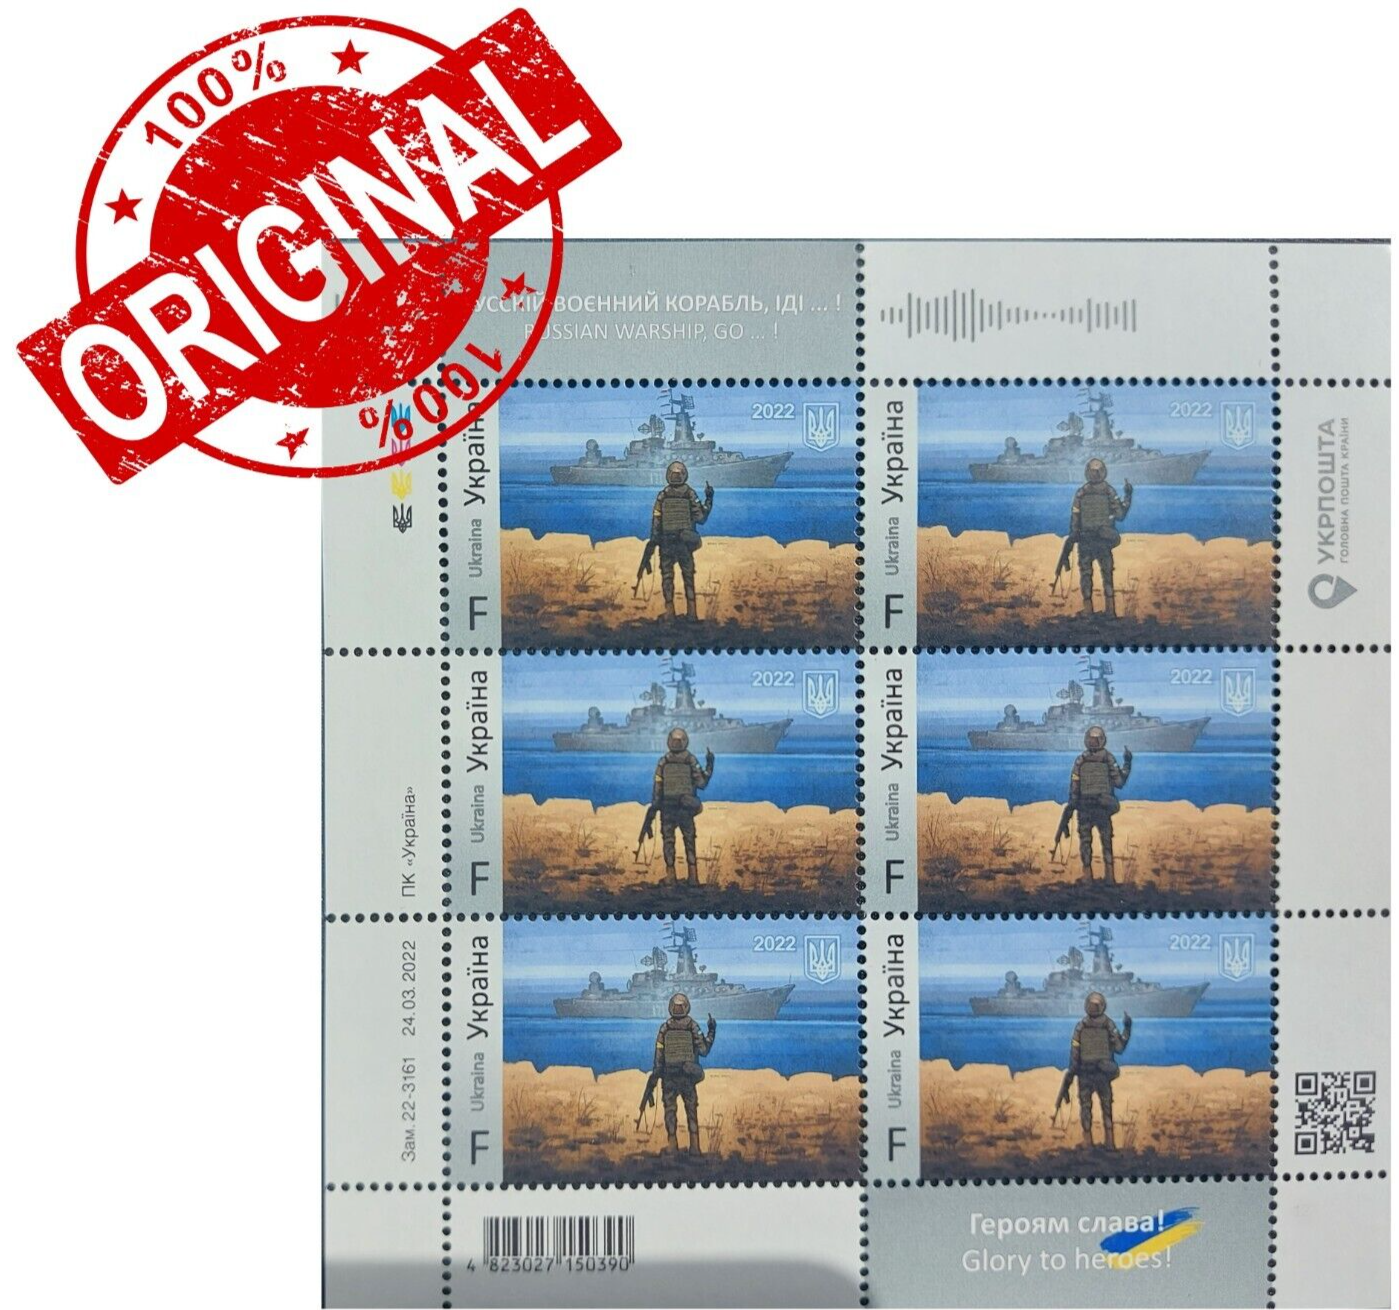 ORIGINAL. Postage stamp of Ukraine. Block  F. "Russian warship go ...!" Без бренда